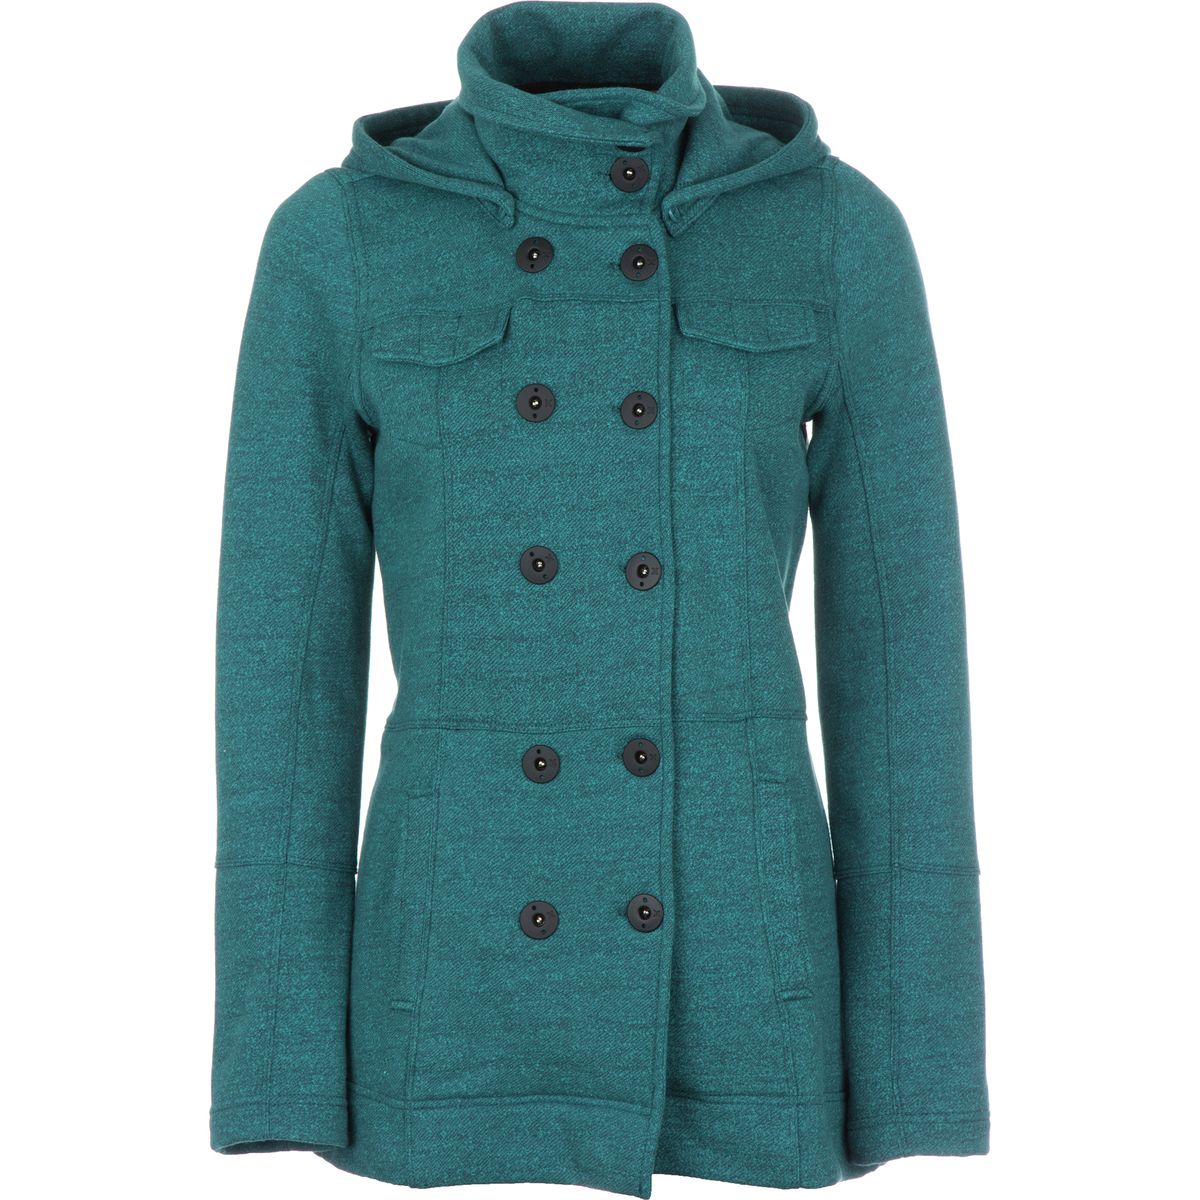 Hurley Winchester Fleece Hooded Jacket - Women's | eBay